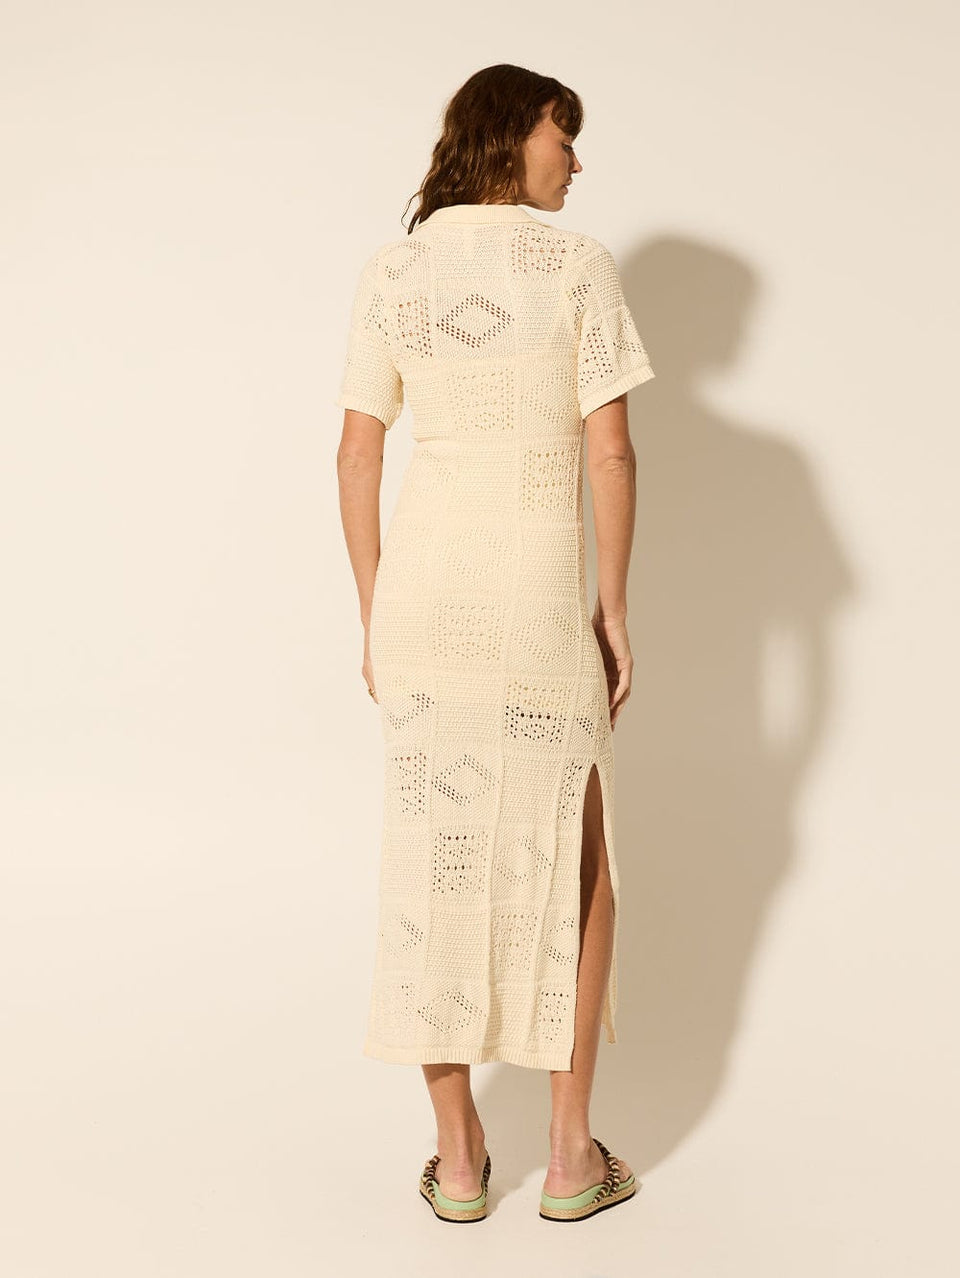 Clementine Collared Midi Dress Cream KIVARI | Model wears cream knit midi dress back view